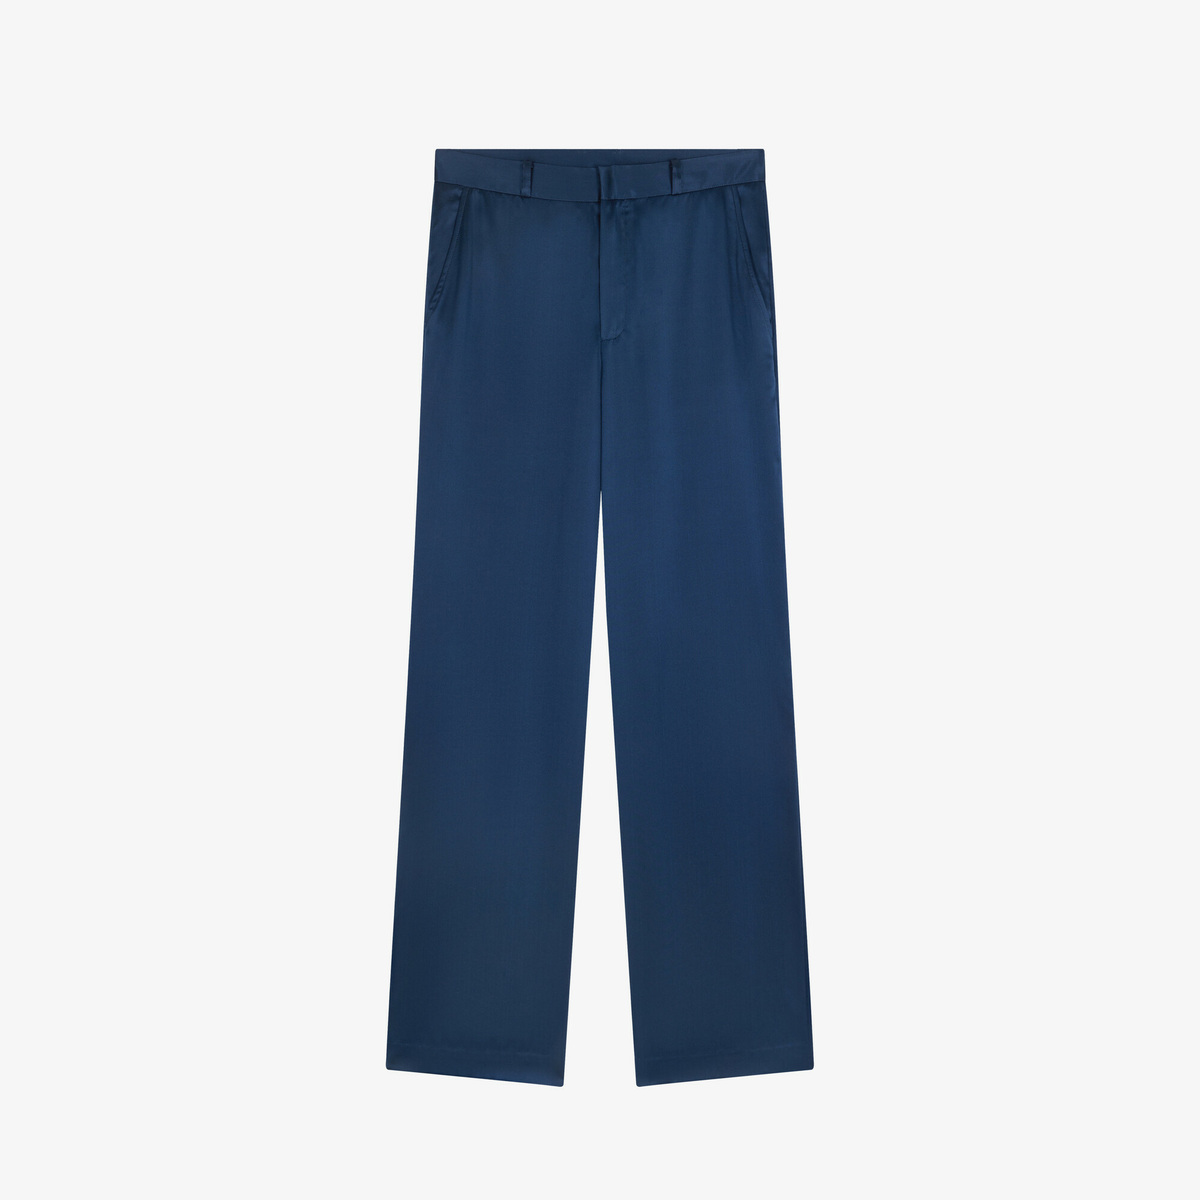 Segur Straight Pants, Broadway Blue - Silk - image 1